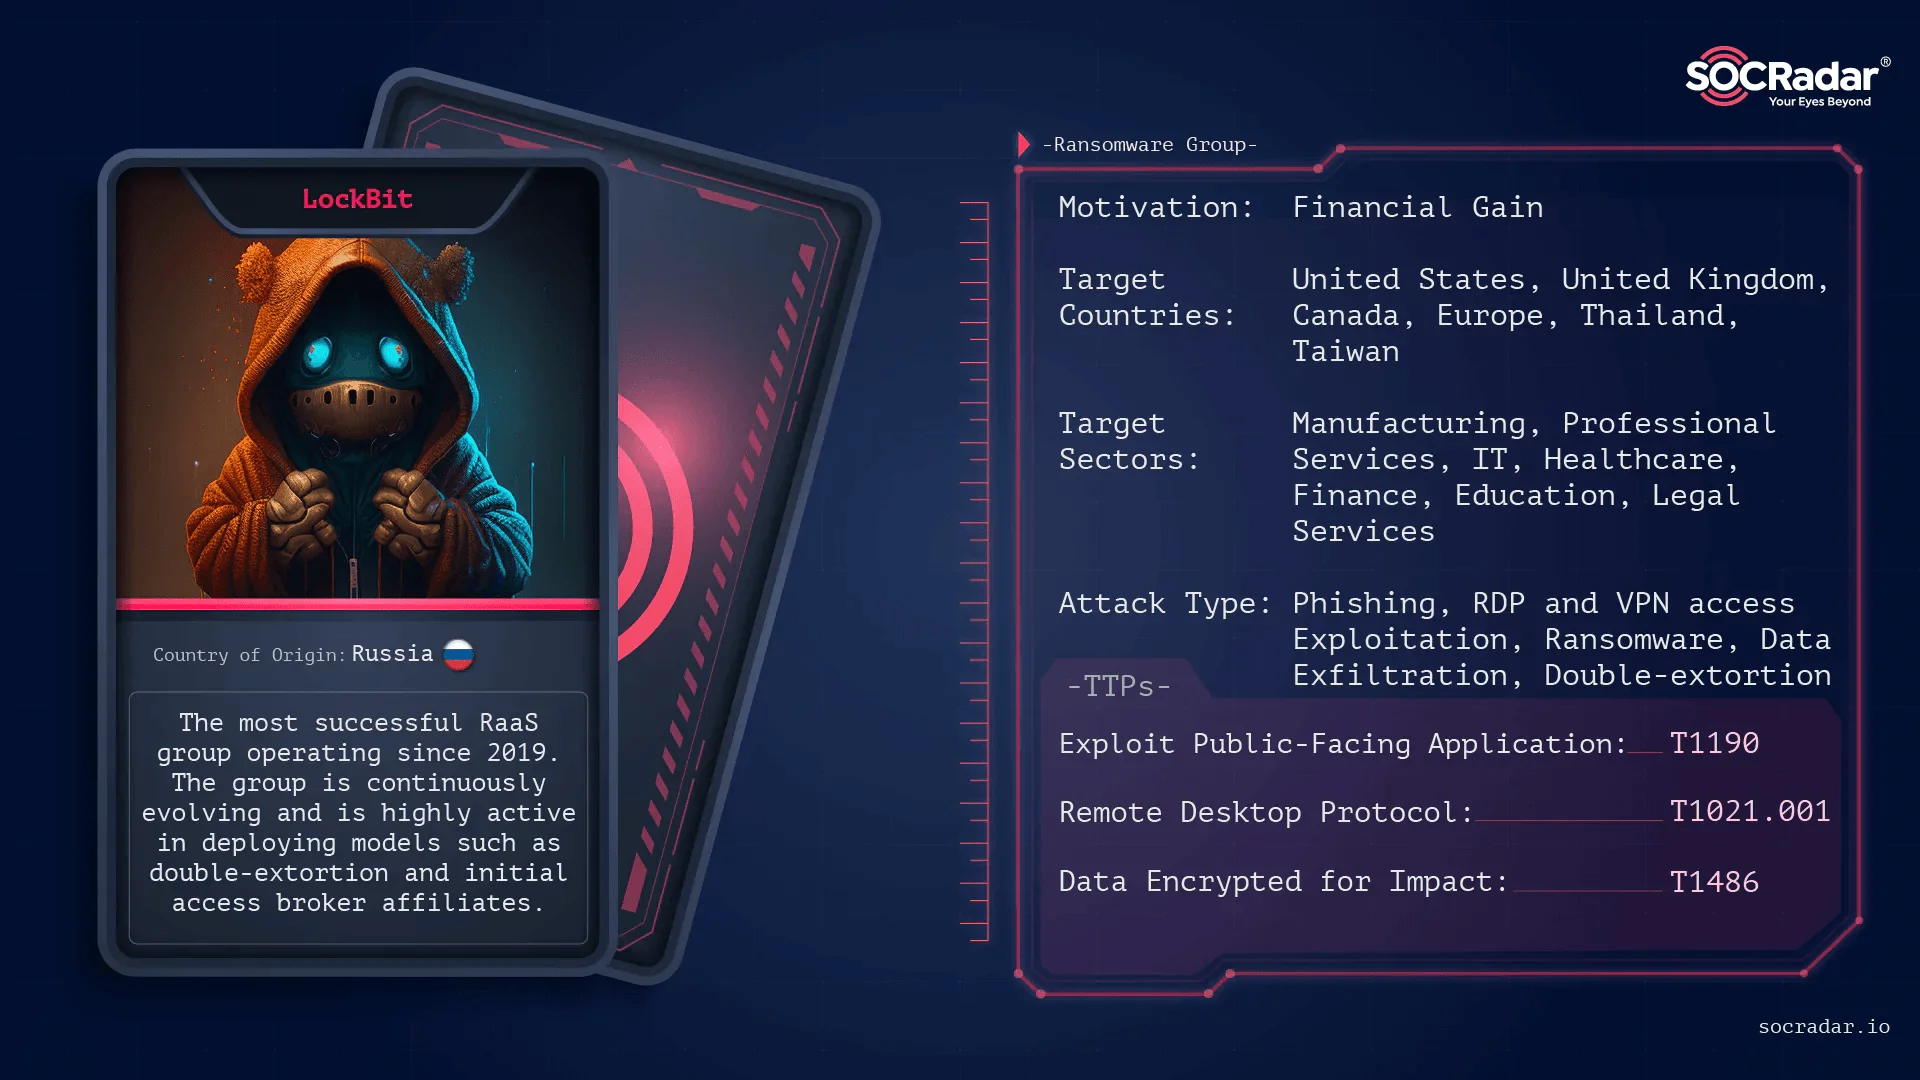 Threat Actor Card of Lockbit 3.0 Ransomware Group